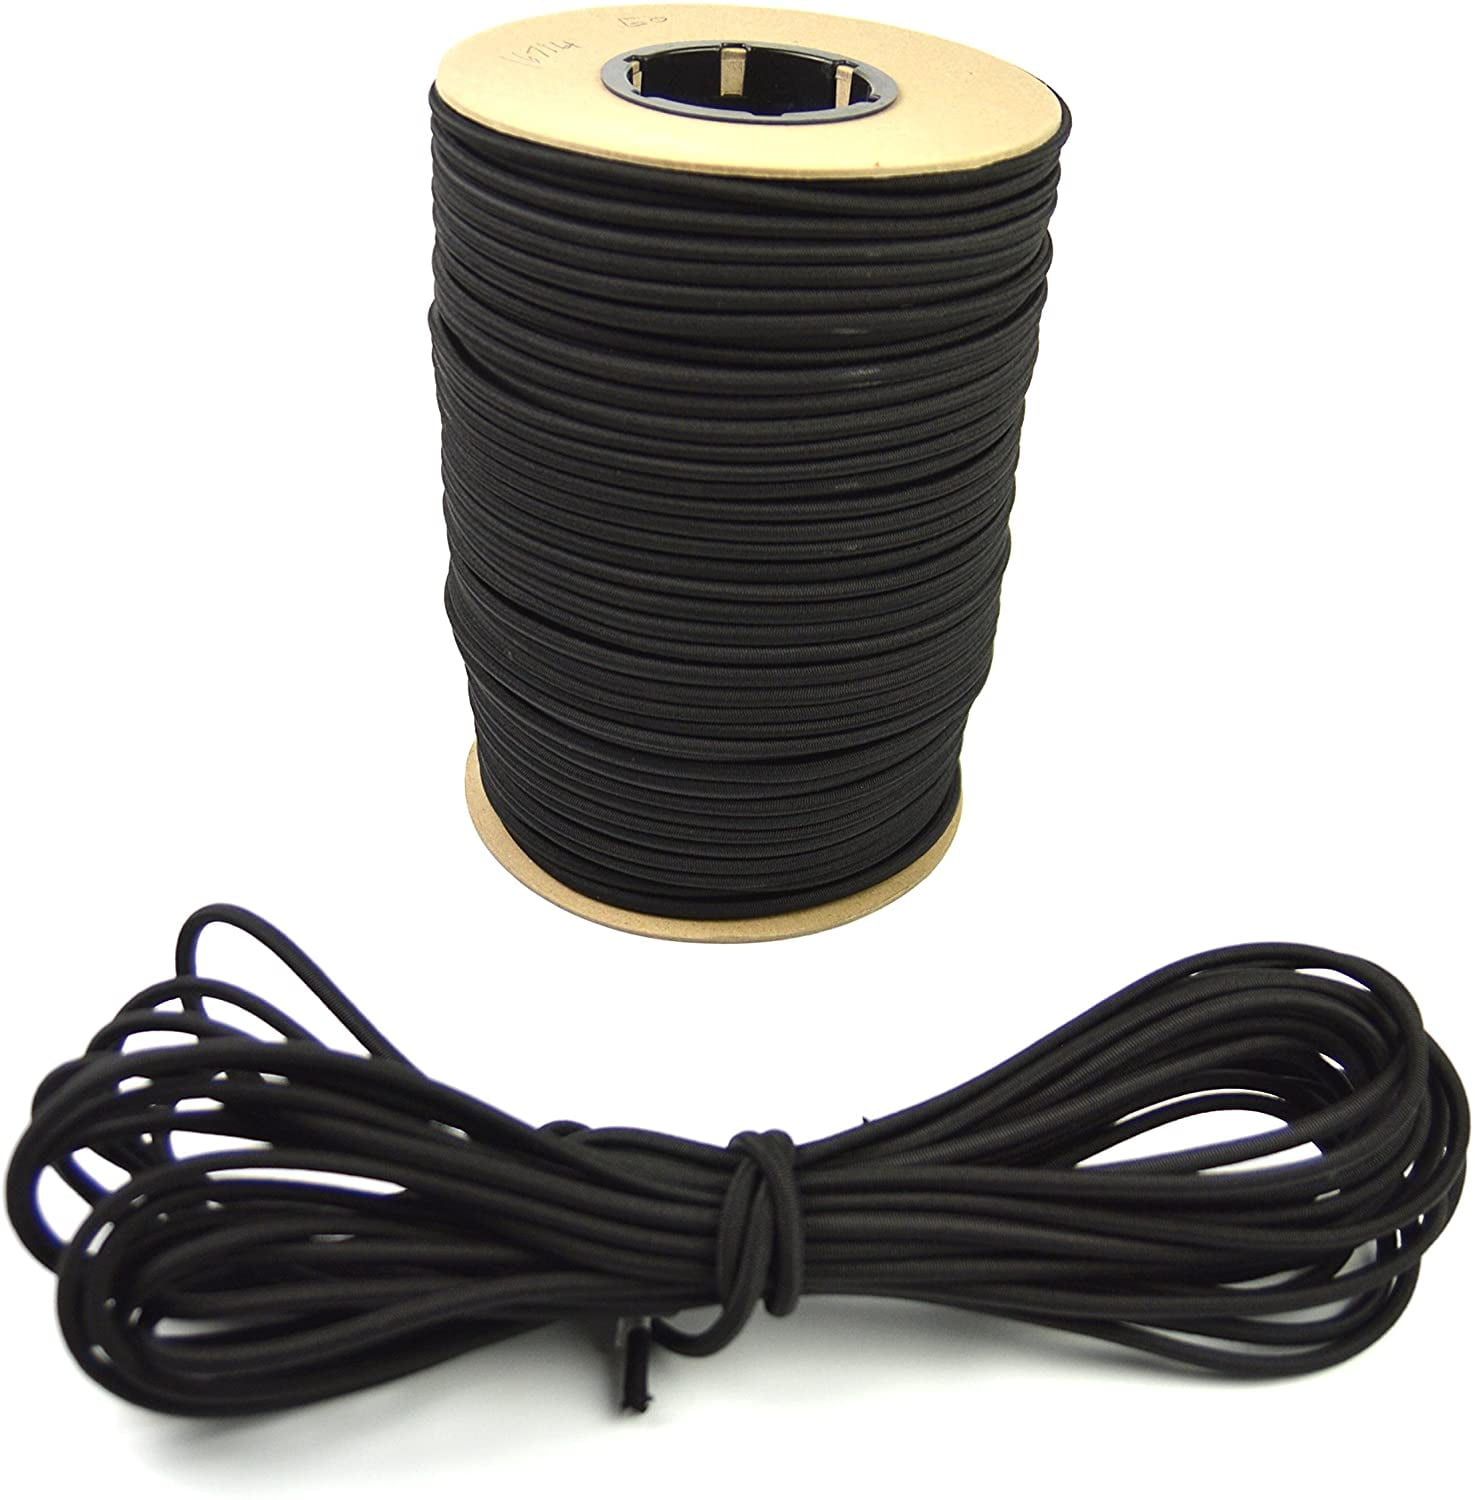 Elastic SHOCKCORD Rope for sale online 5 MTS Black Elasticated 3mm Diameter Bungee Shock Cord 